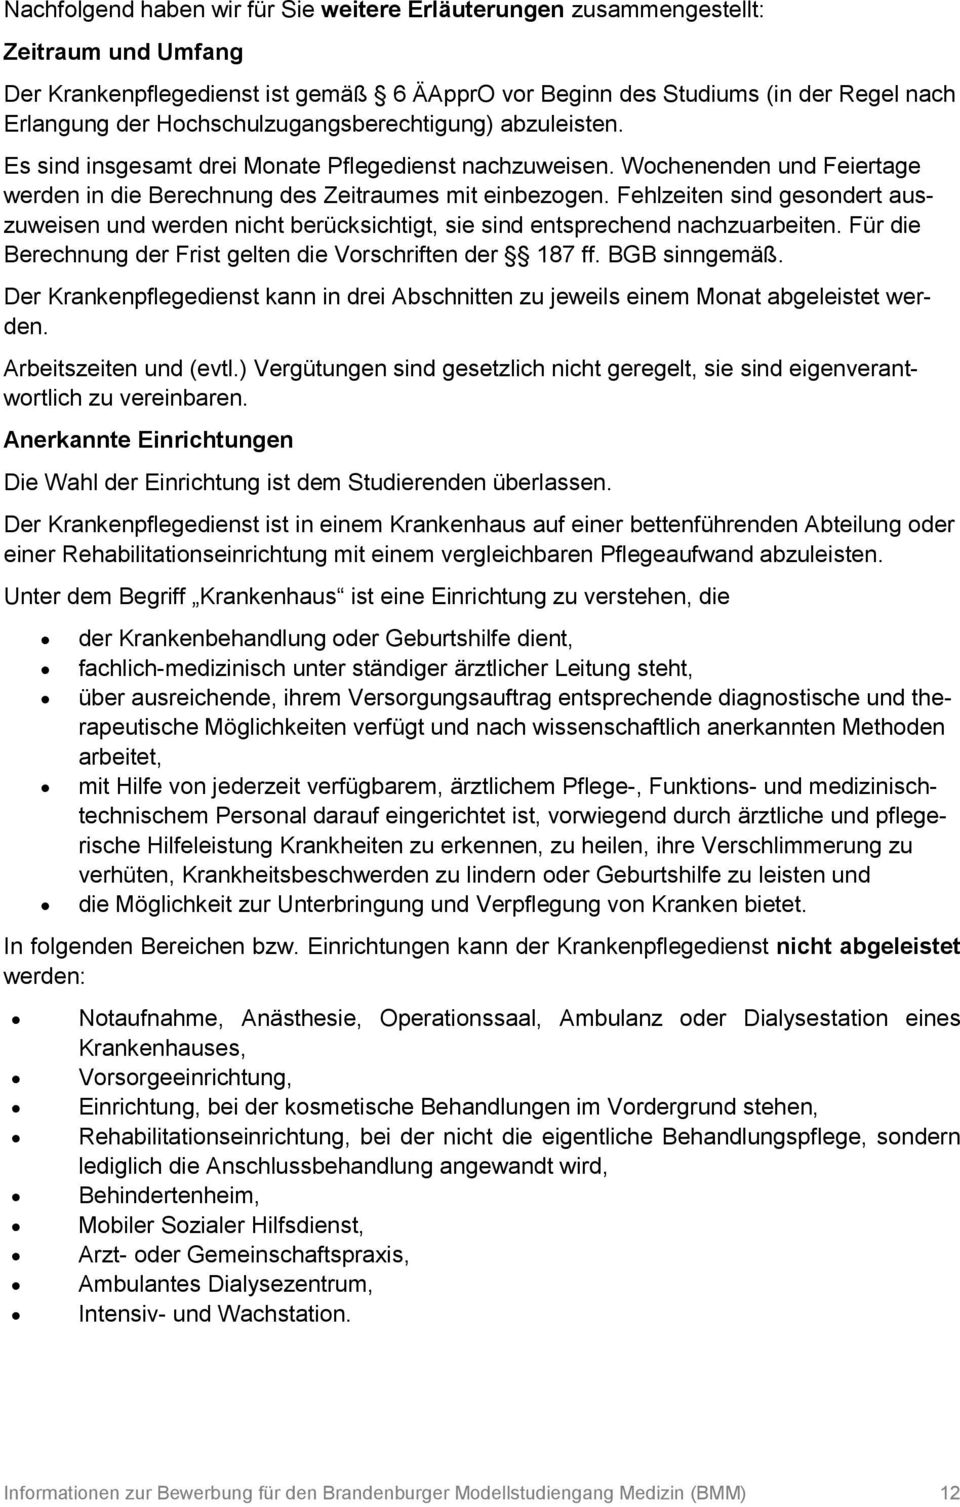 Brandenburger Modellstudiengang Medizin Bmm Pdf Free Download